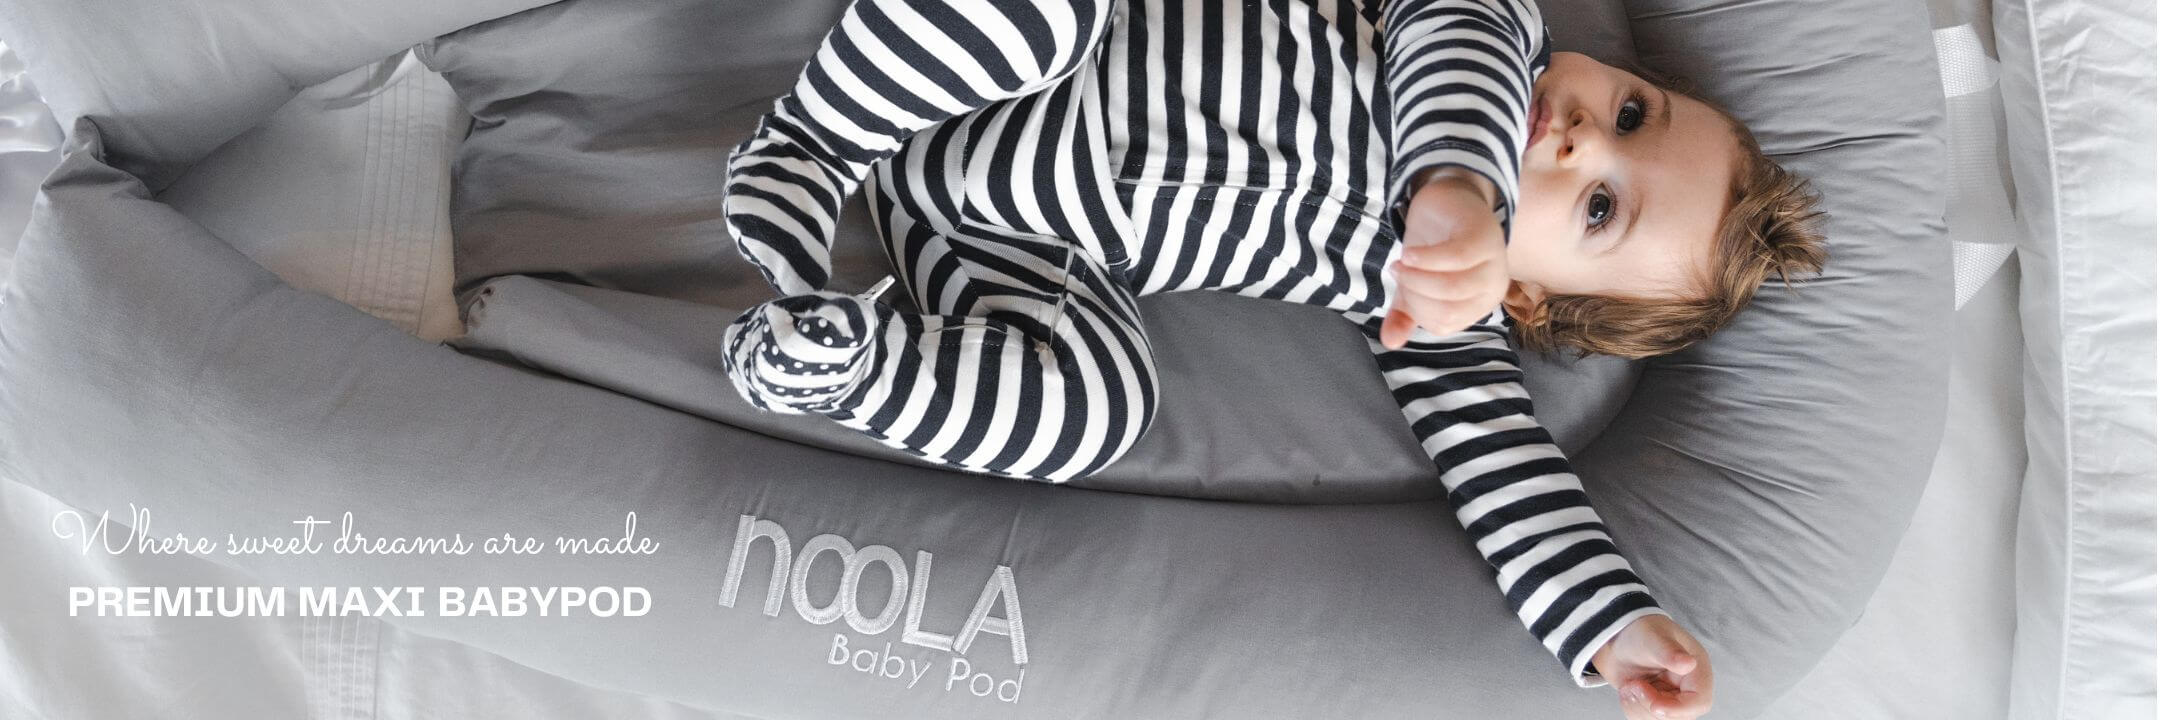 noola premium babypod nursing pillow grey